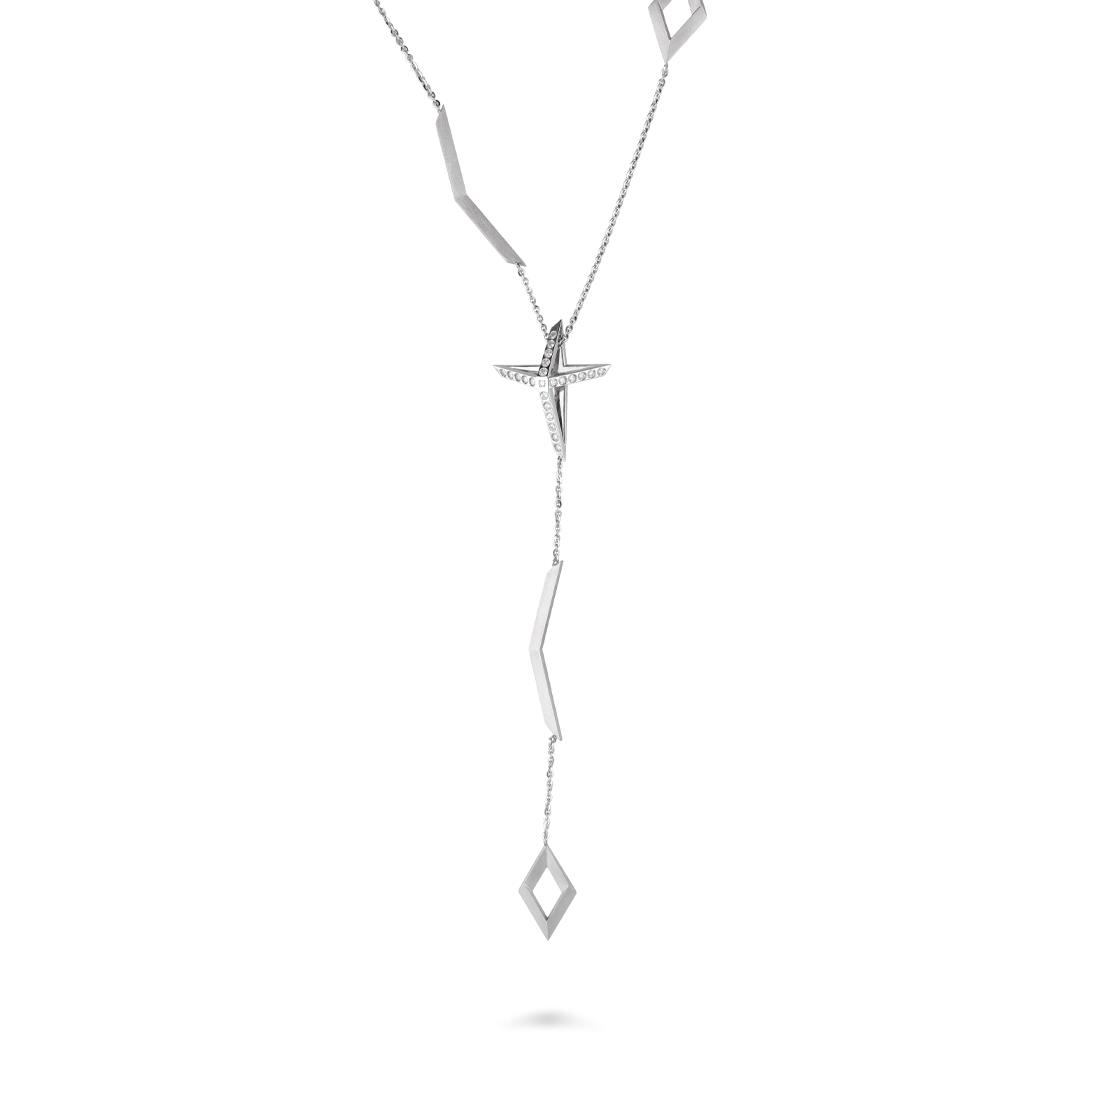 La Croce necklace in gold with long pendant and diamonds - ALFIERI & ST. JOHN